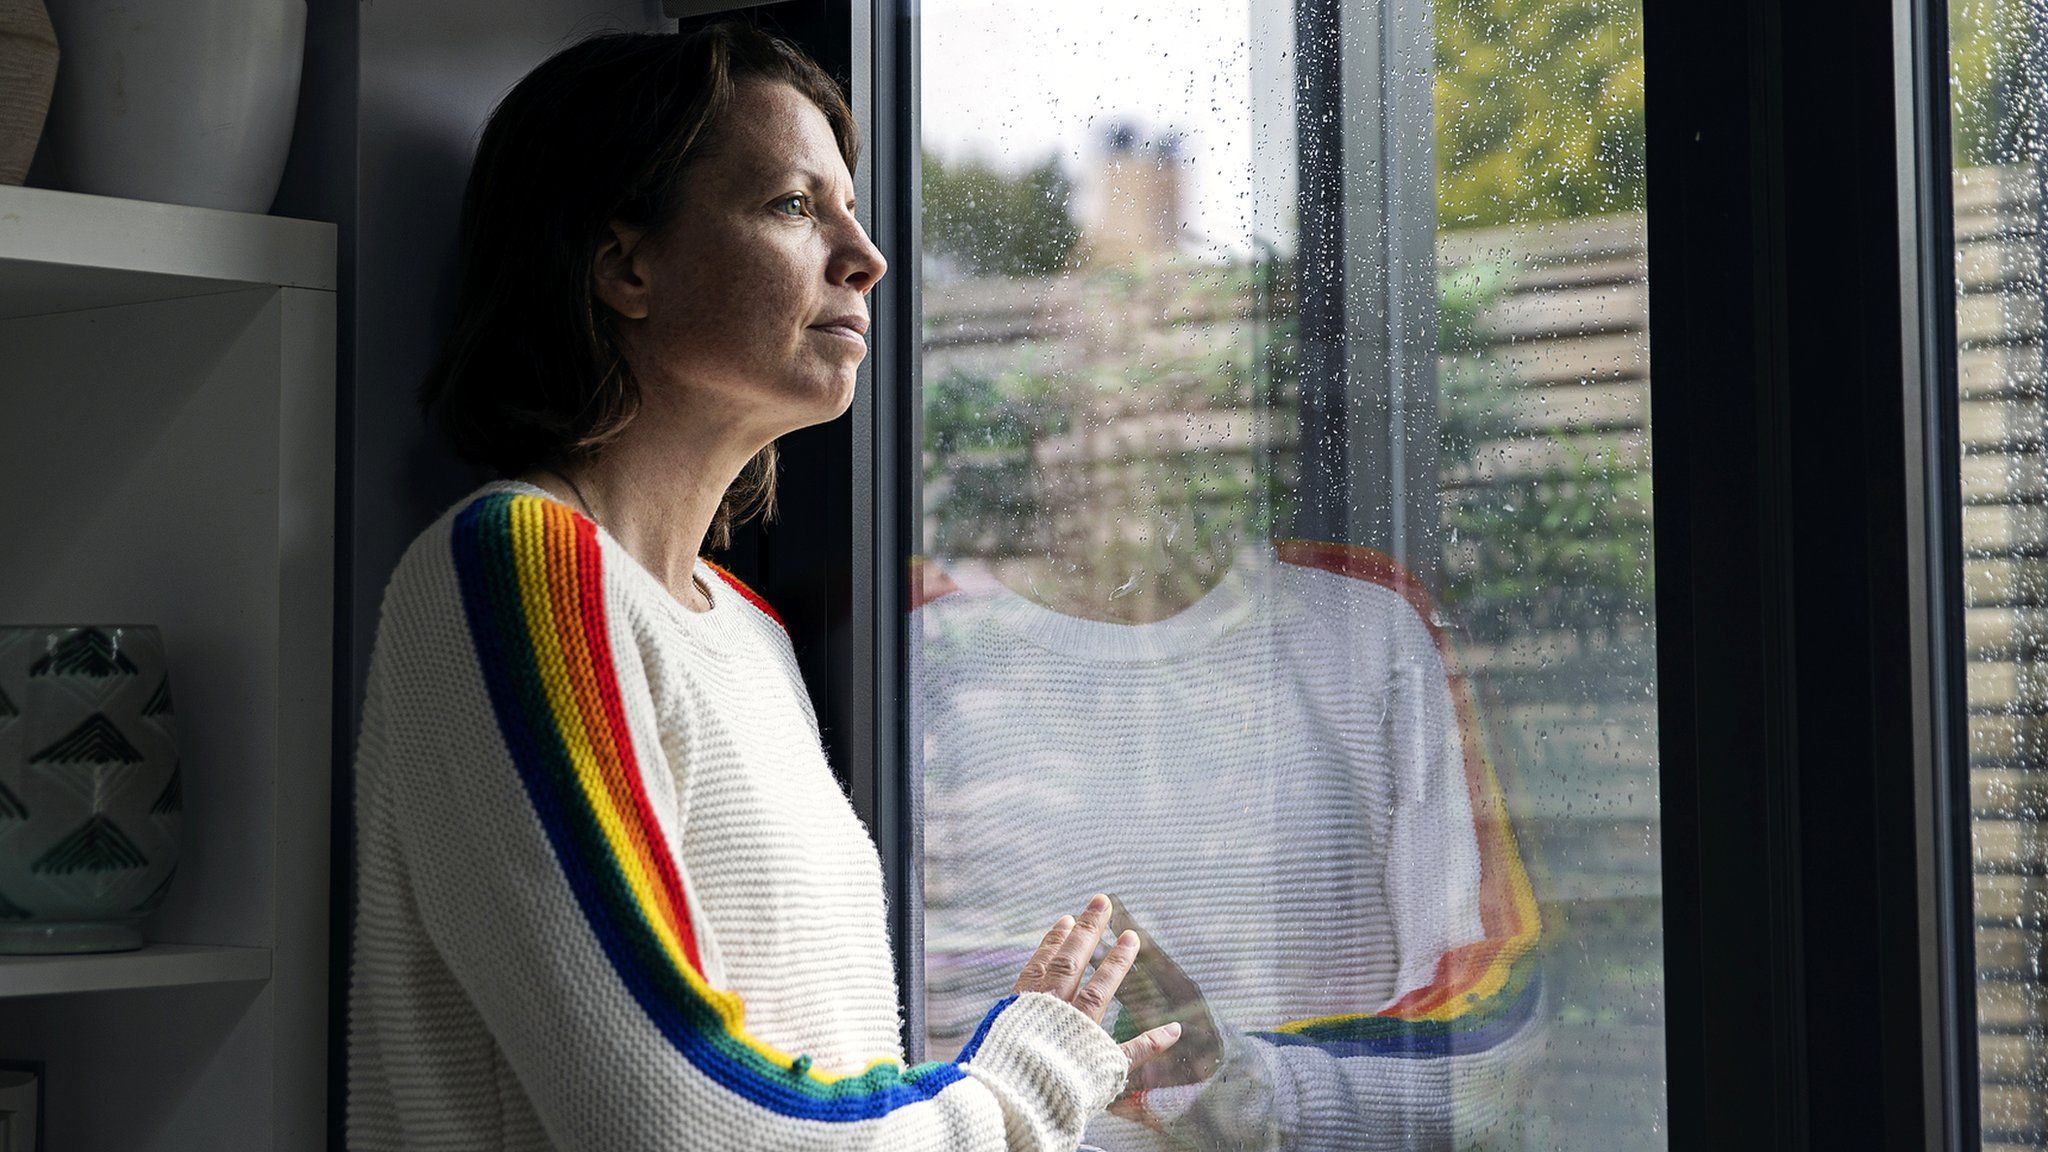 A woman looks through a window